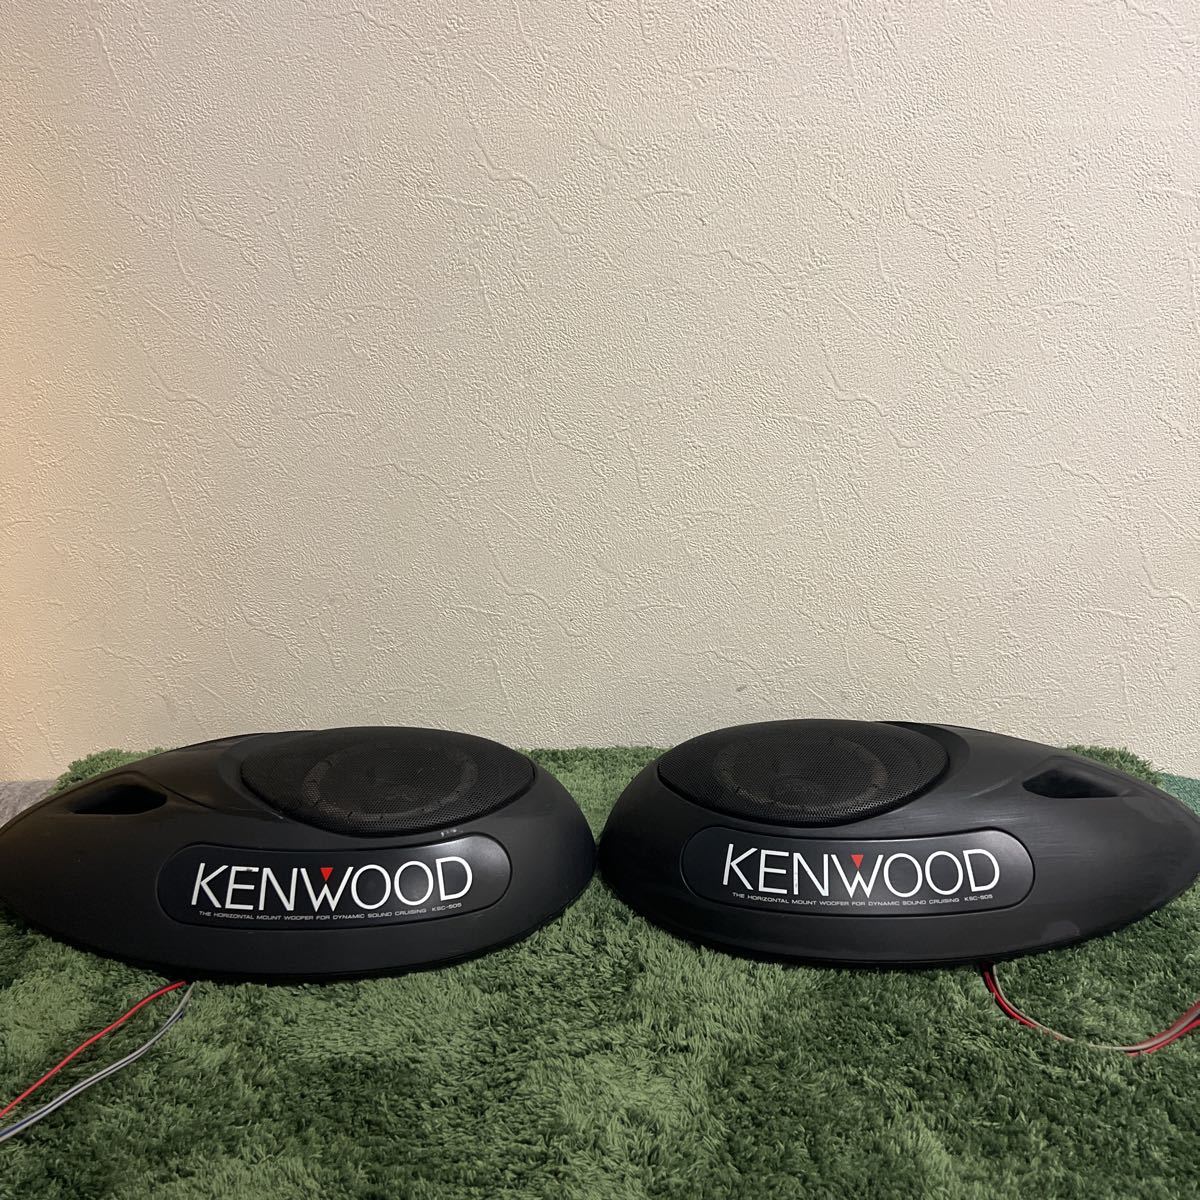 Yahoo!オークション -「ケンウッド kenwood ksc-7070」(カーオーディオ